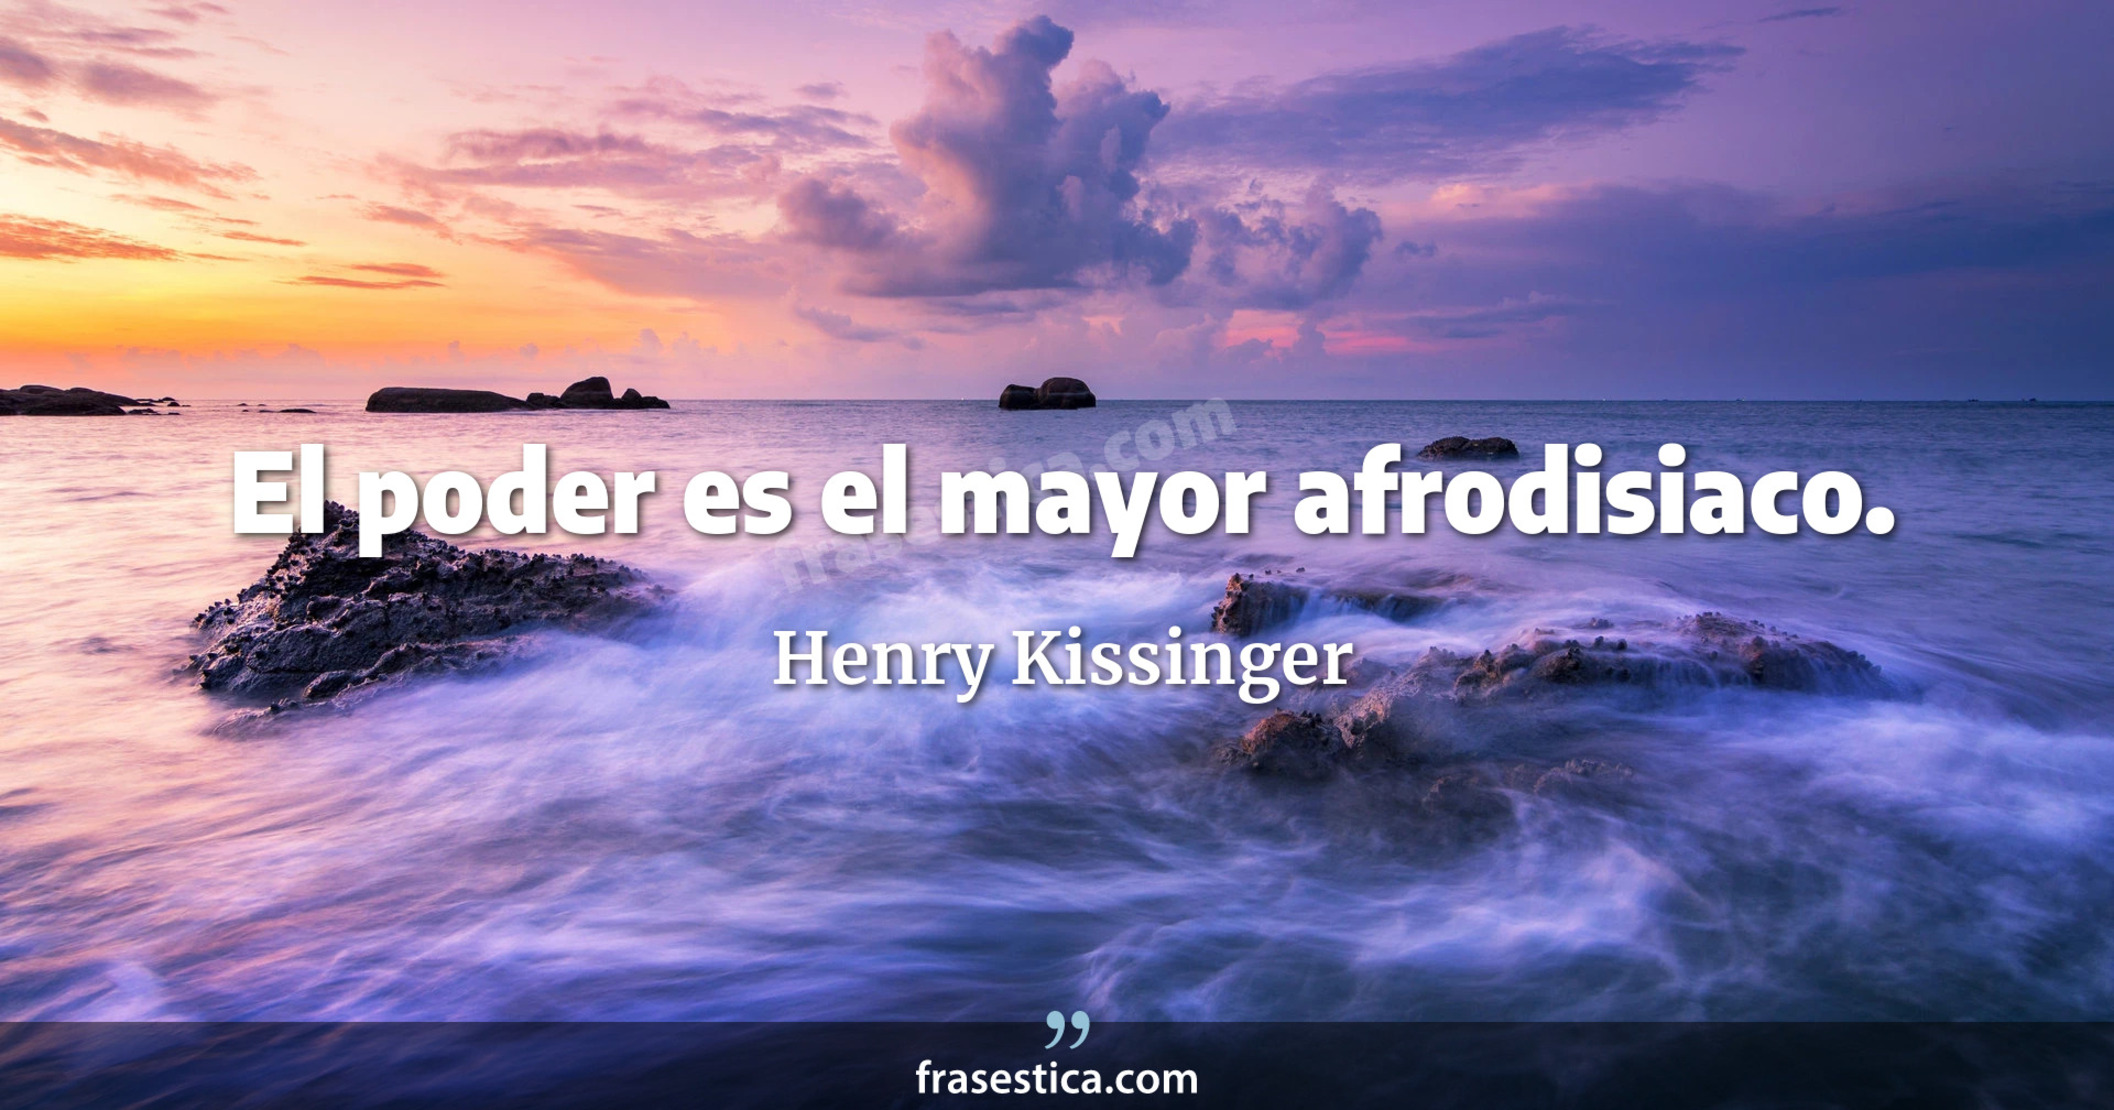 El poder es el mayor afrodisiaco. - Henry Kissinger